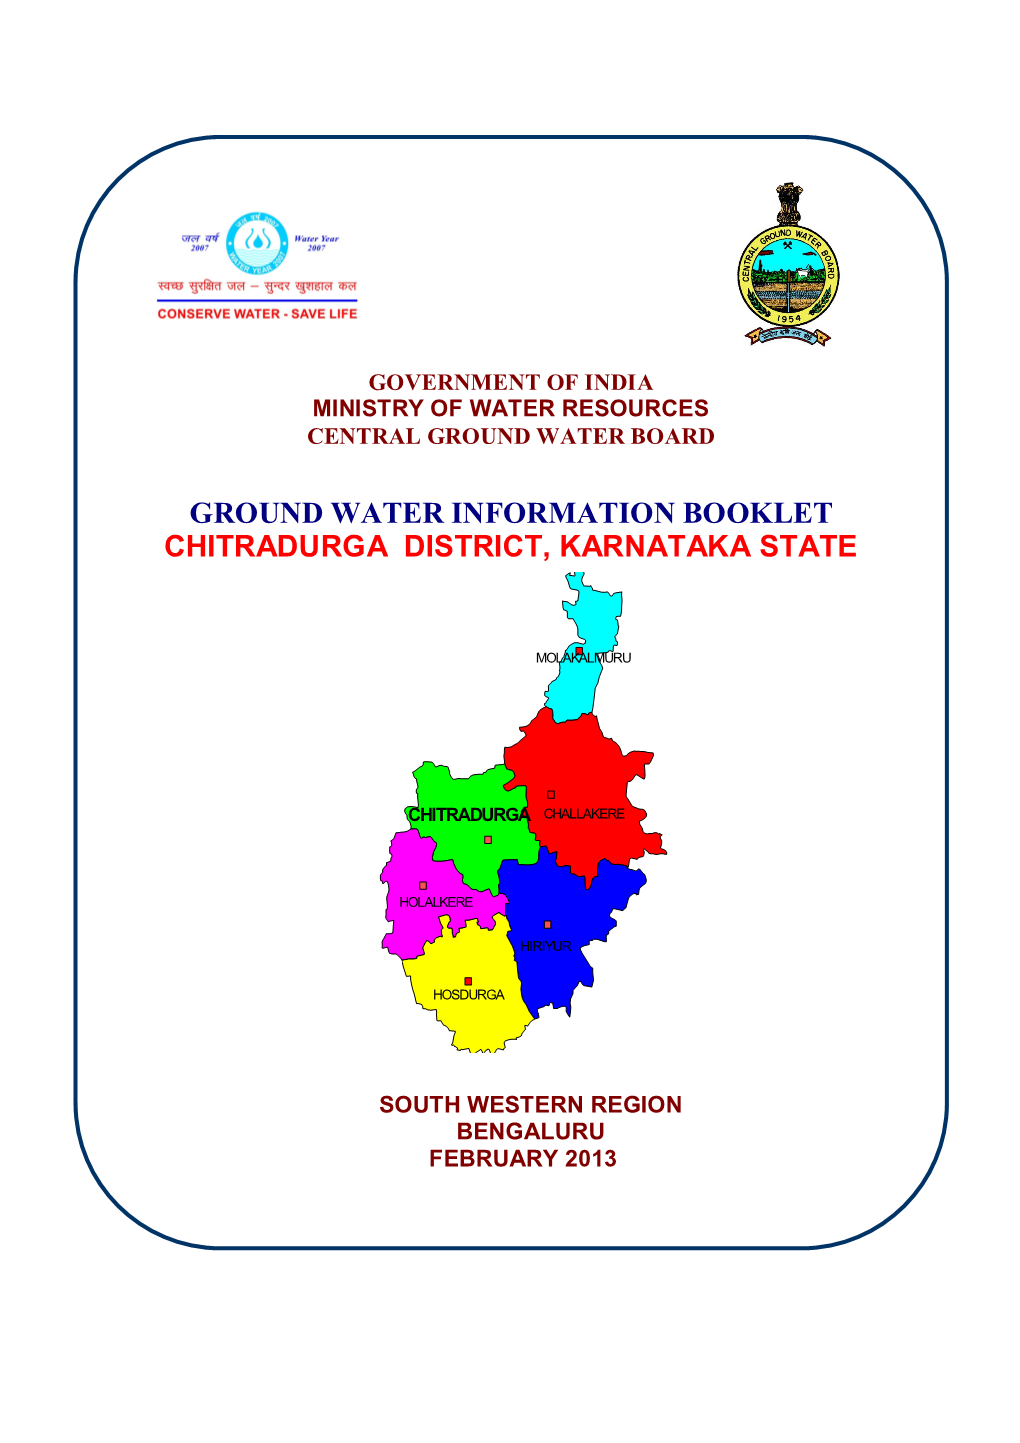 Chitradurga District, Karnataka State